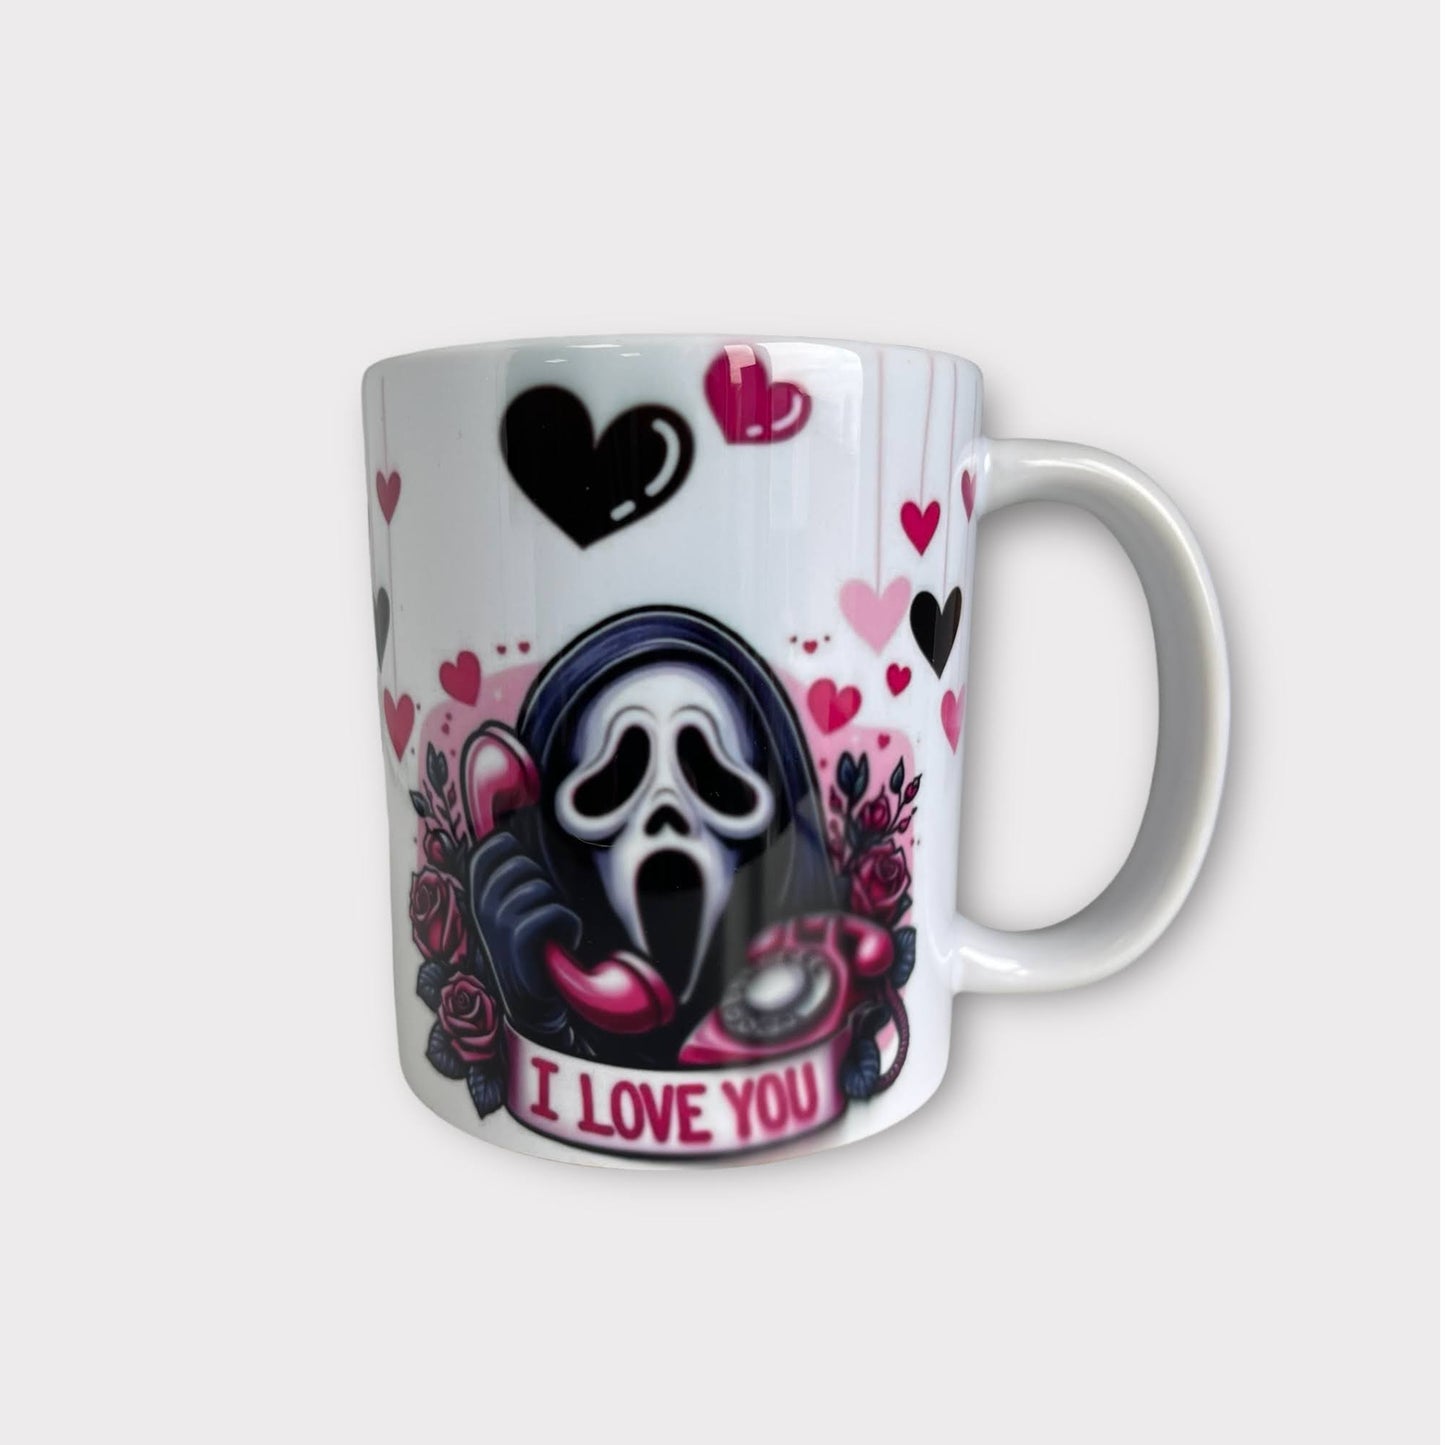 Scream Valentine Mug With Optional Personalisation